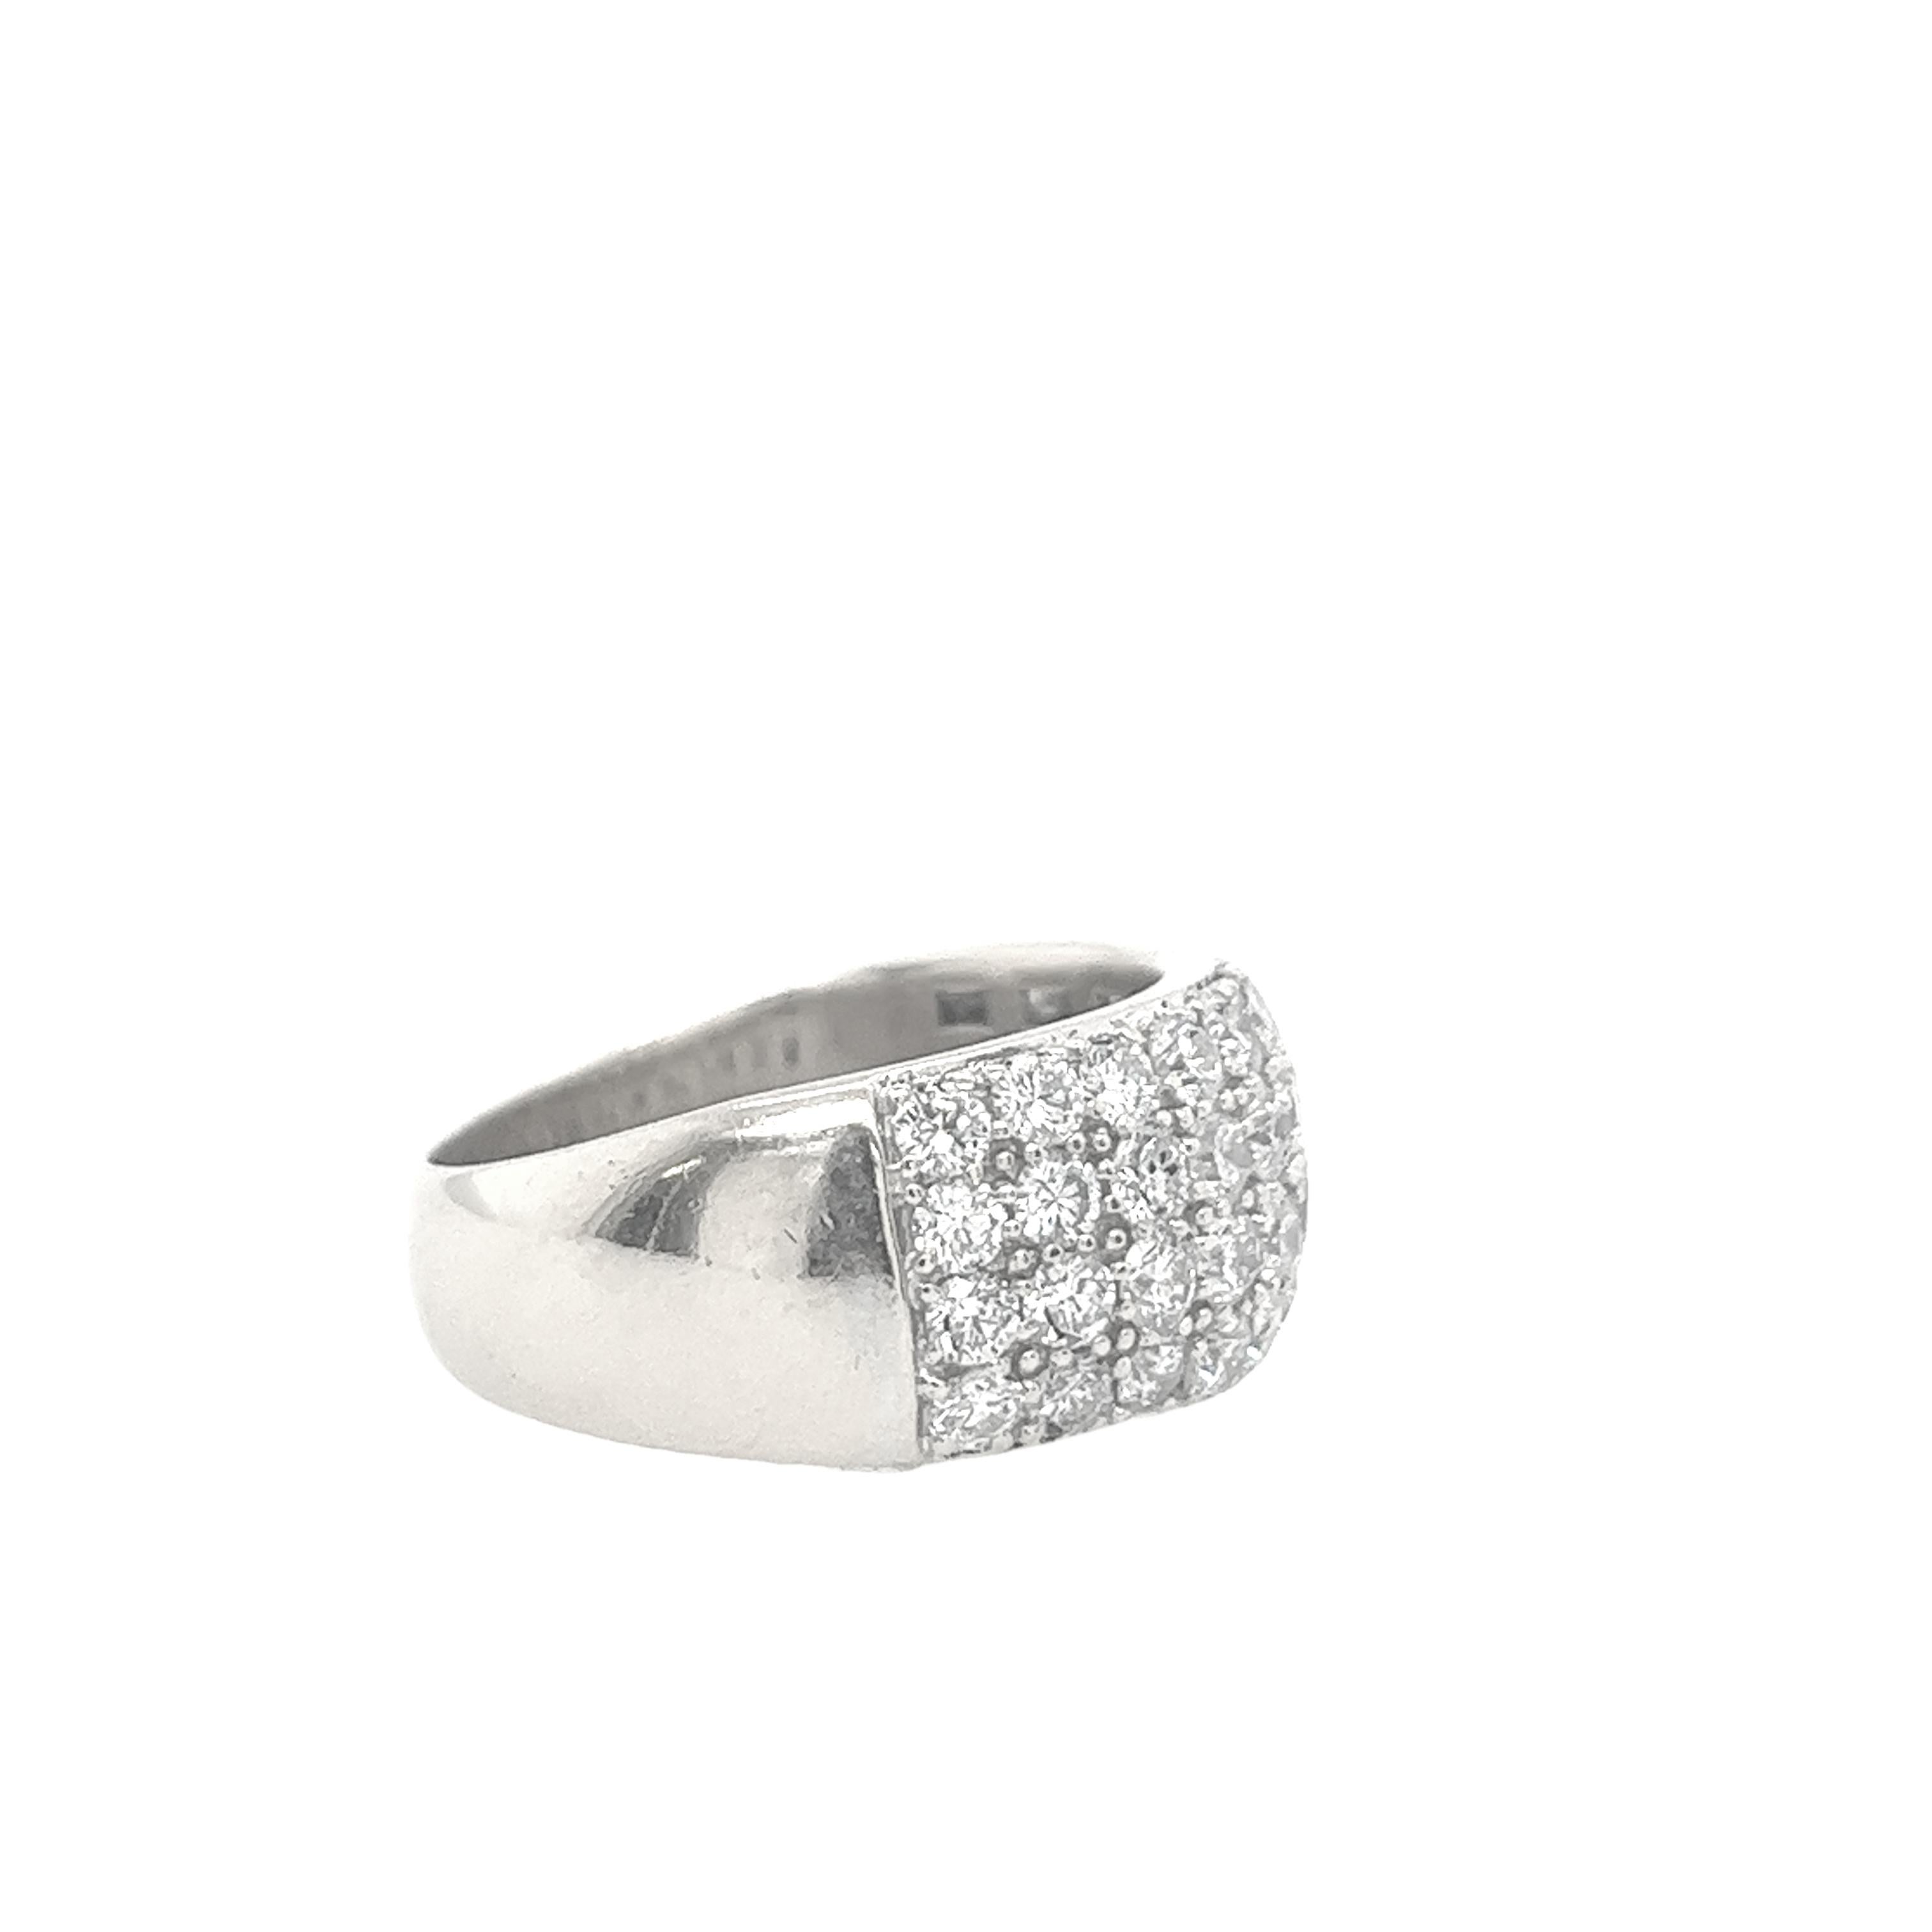 18ct White Gold 4-Row Diamond Dress Ring Set With 2.55 carats Natural Diamonds 1